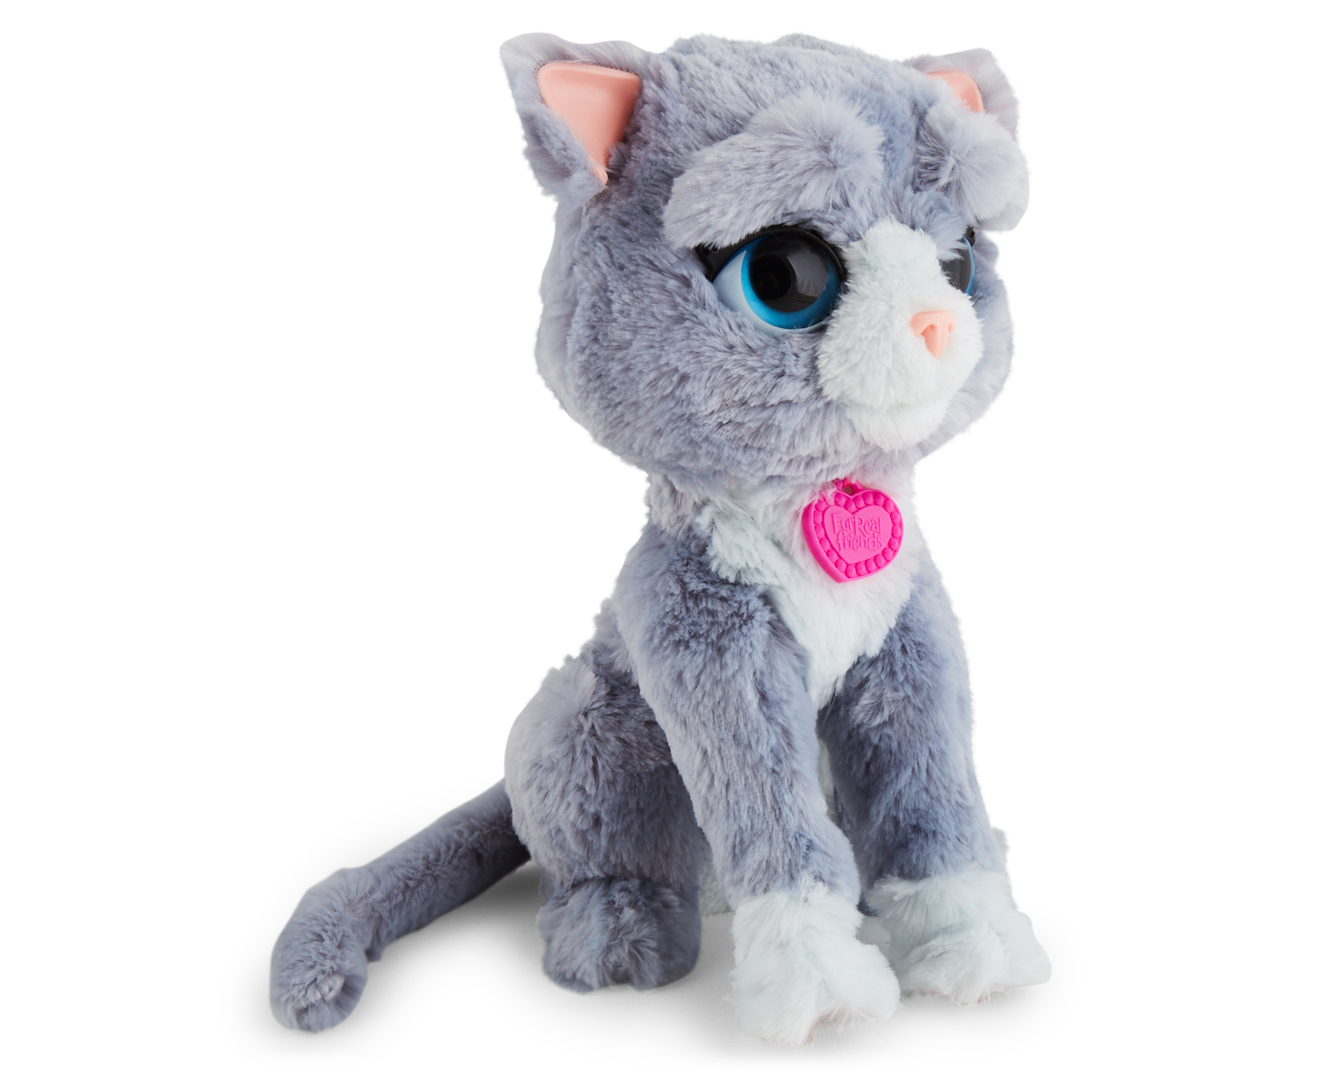 FurReal Friends Bootsie The Kitty Doll | eBay